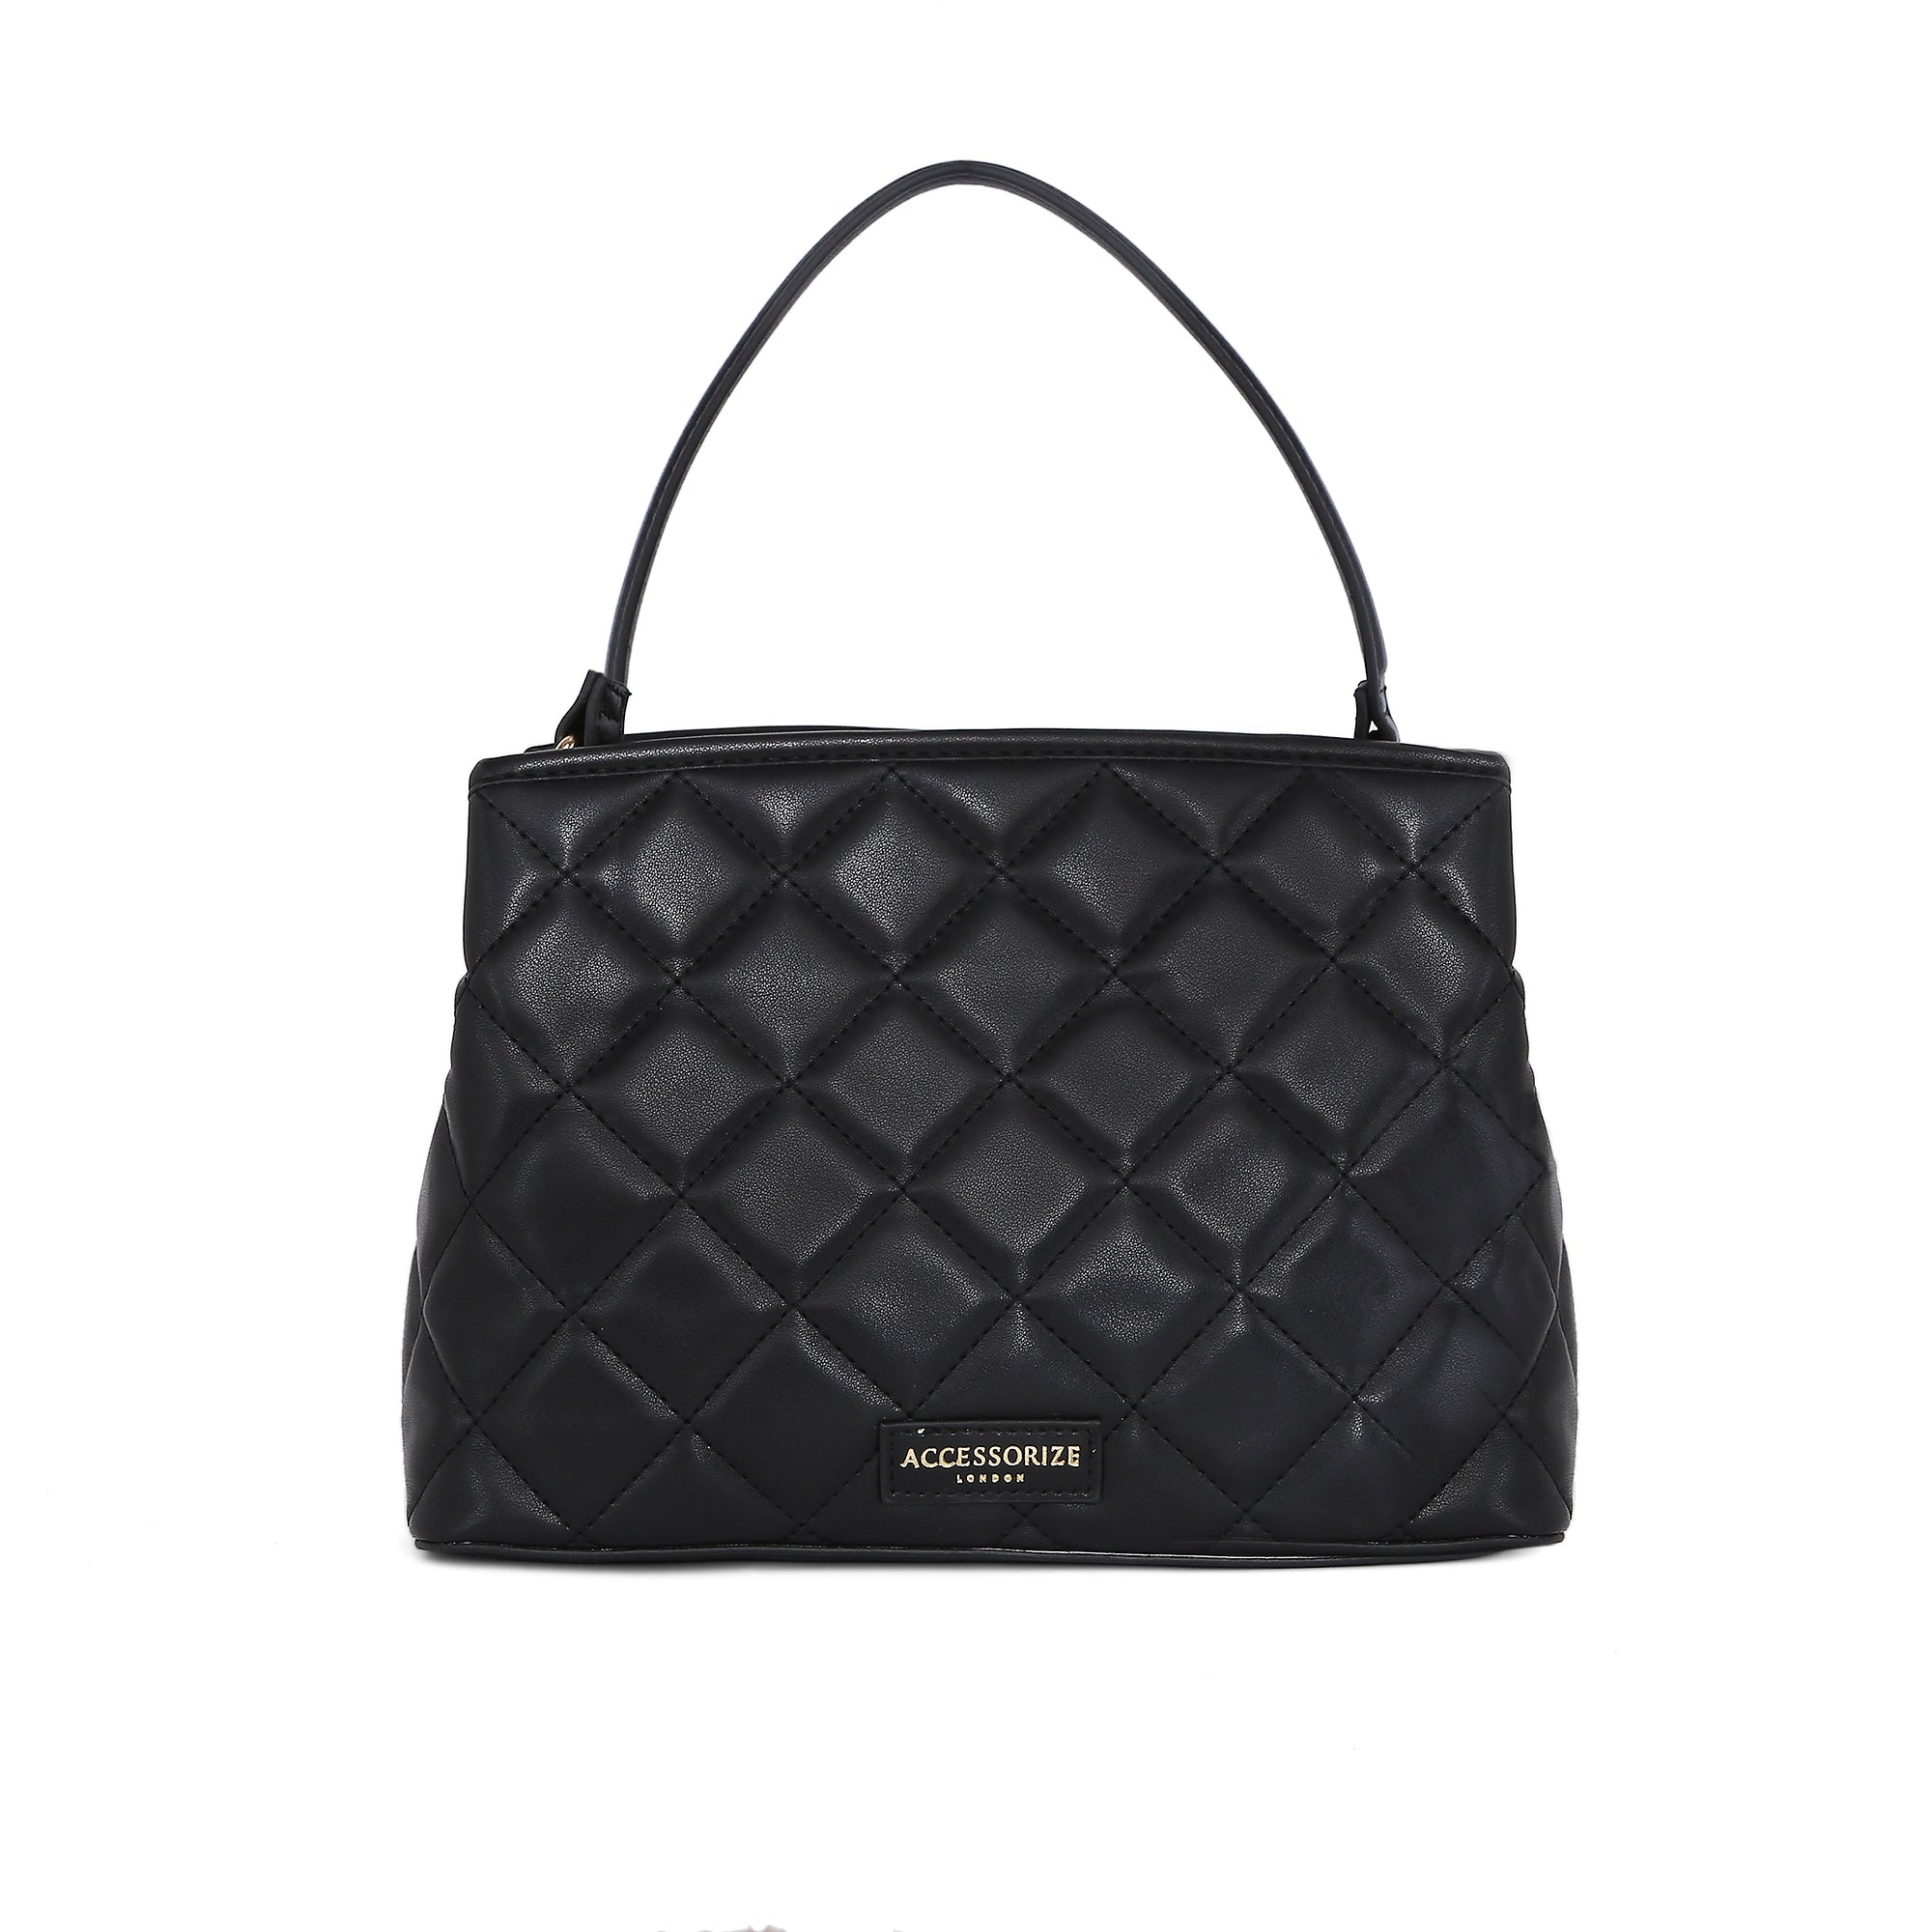 Accessorize London women's Faux Leather Black Quilted Handheld Large Satchel bag